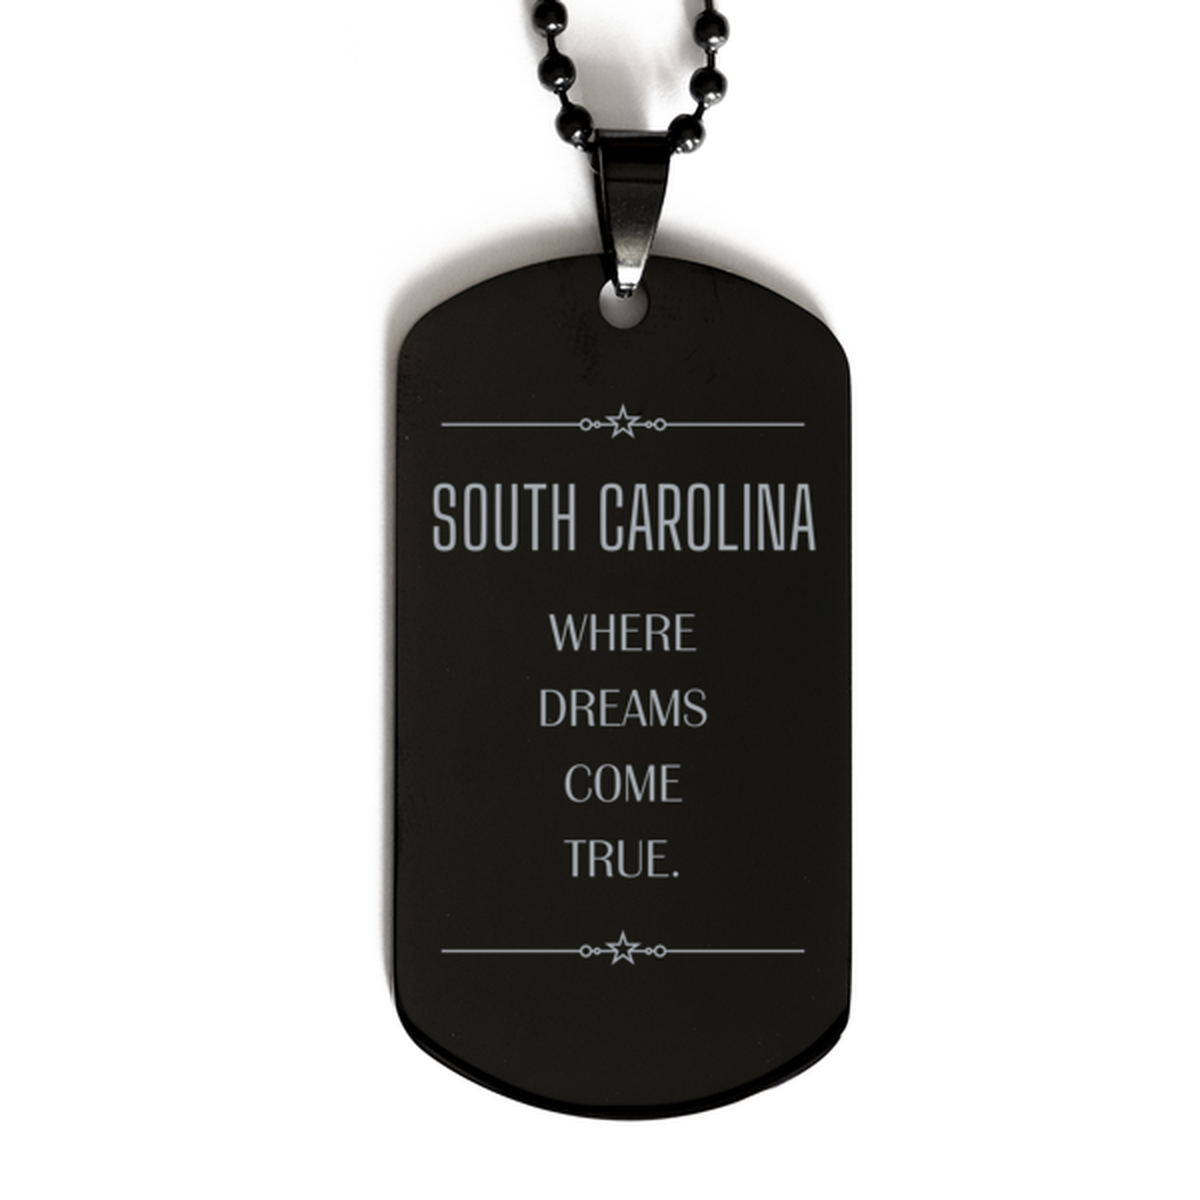 Love South Carolina State Black Dog Tag, South Carolina Where dreams come true, Birthday Inspirational Gifts For South Carolina Men, Women, Friends